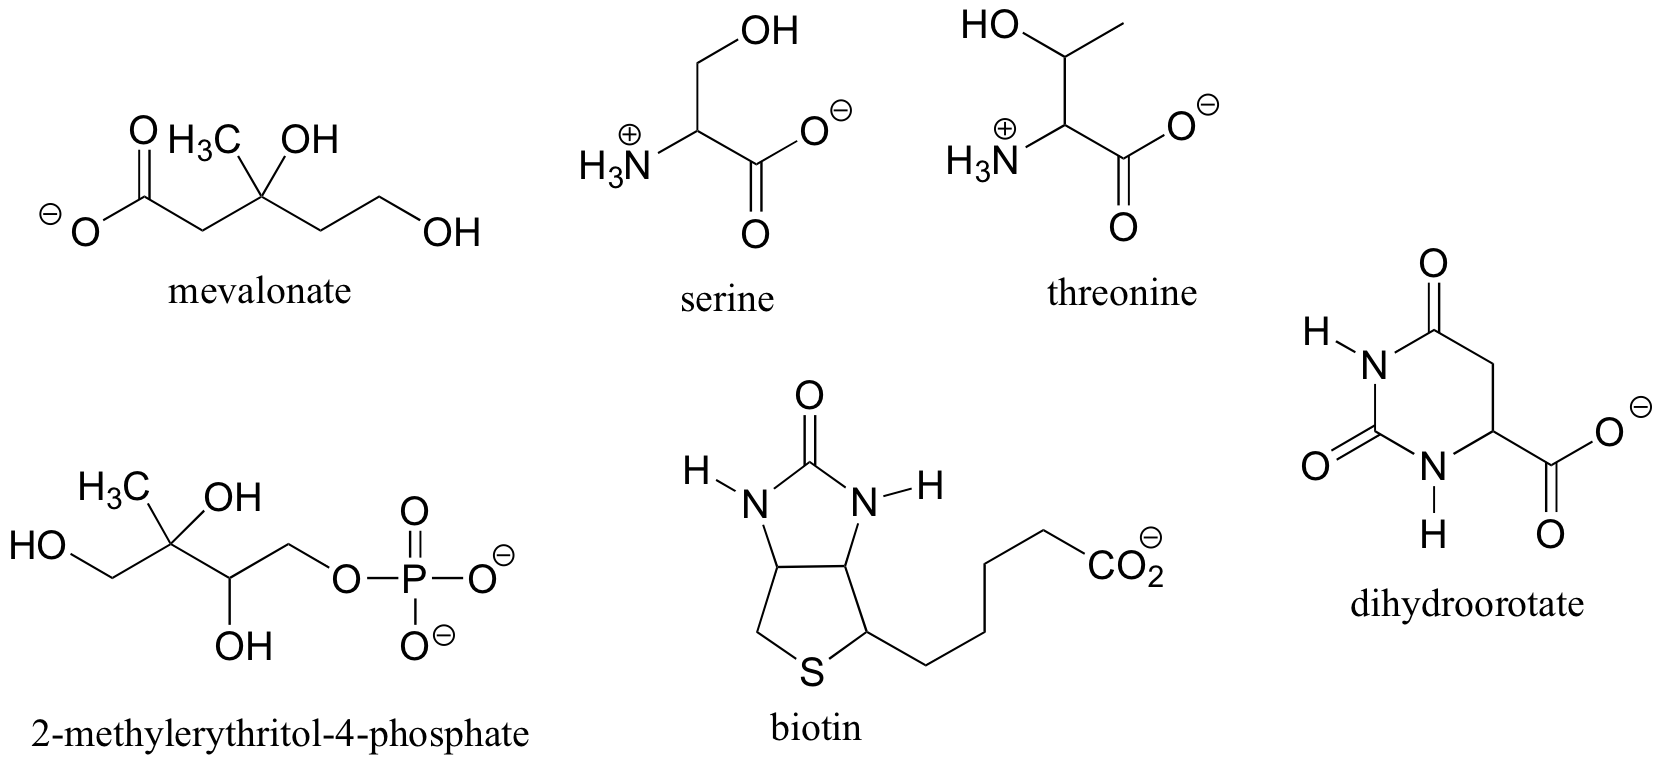 Molecules of mevalonate, serine, threonine, 2-methylerythritol-4-phosphate, biotin, and dihydroorotate. 